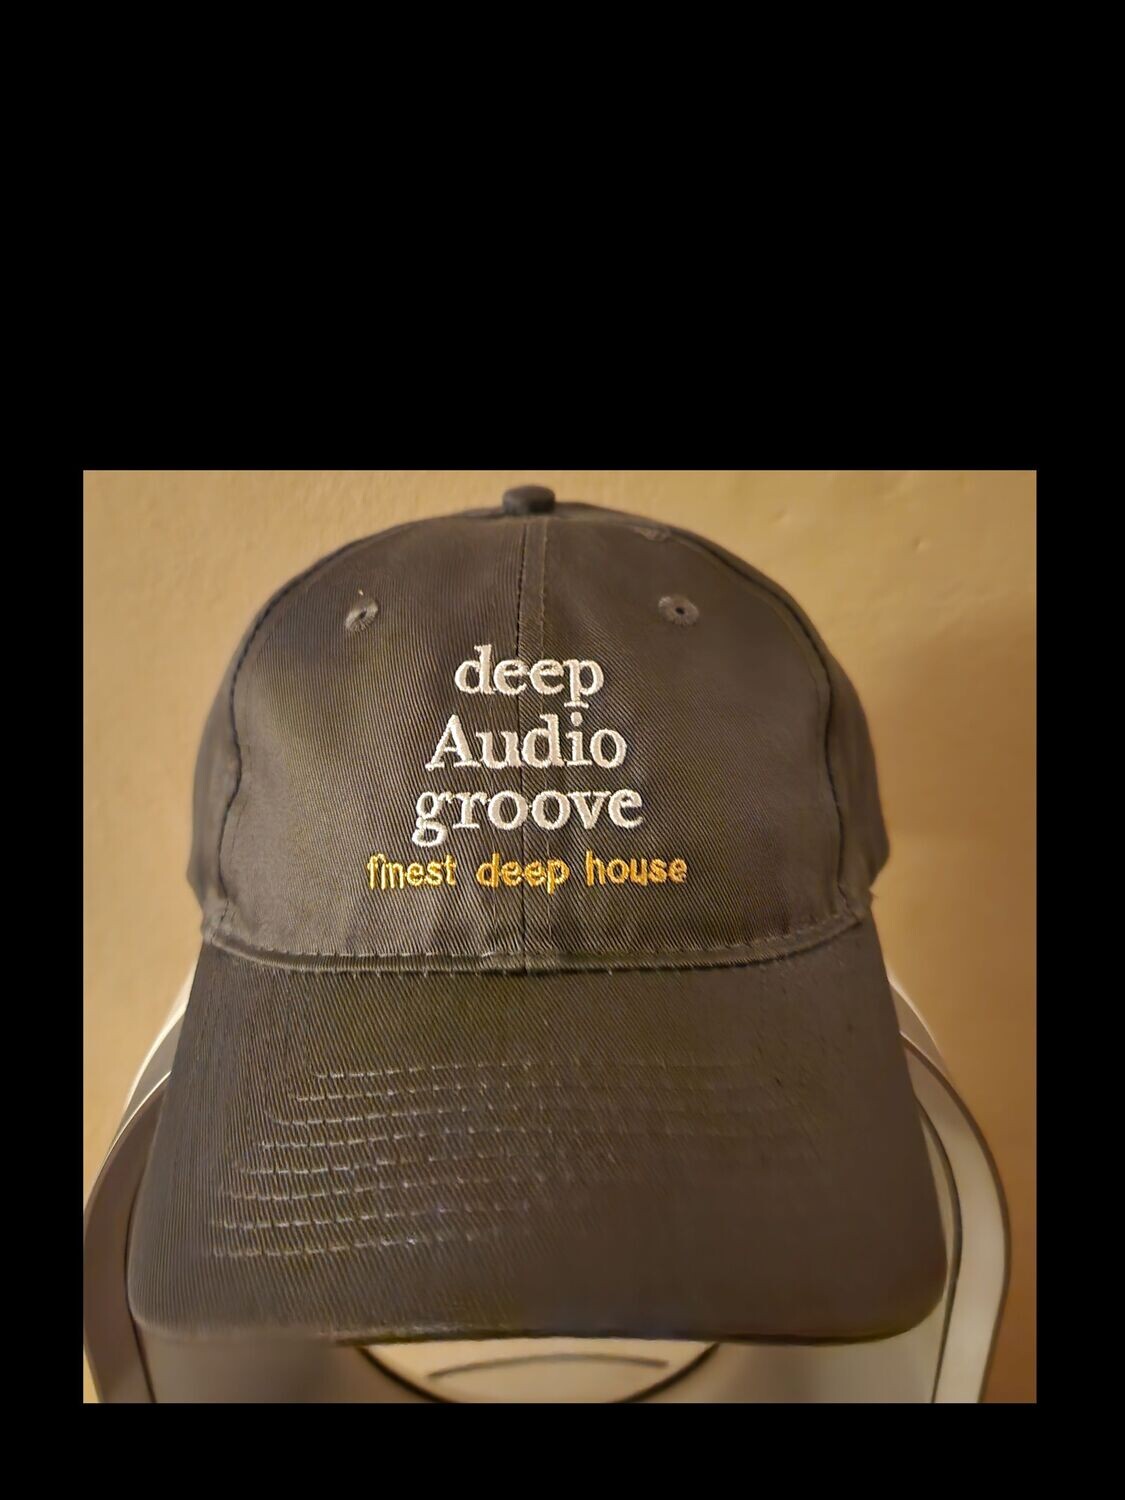 deep Audio groove | finest deep house | gray cotton hat